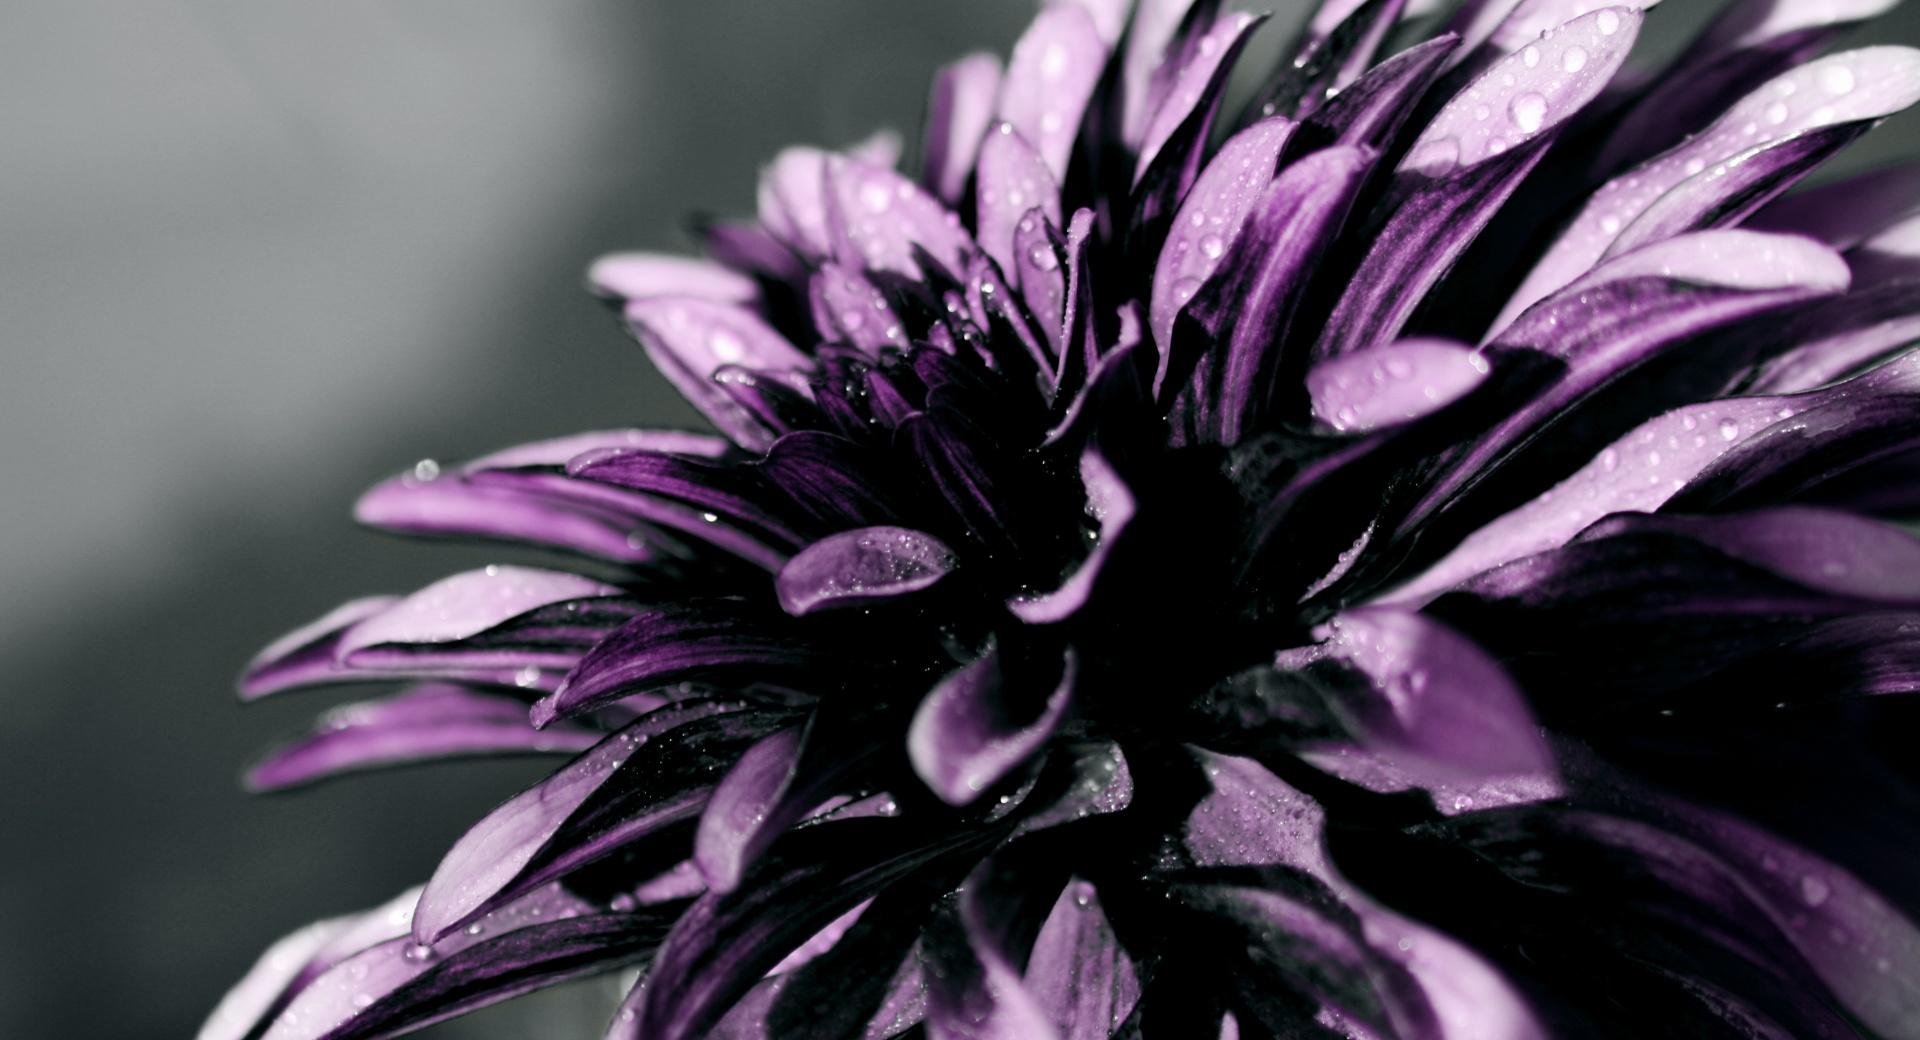 Purple Chrysanthemum Macro at 1024 x 1024 iPad size wallpapers HD quality